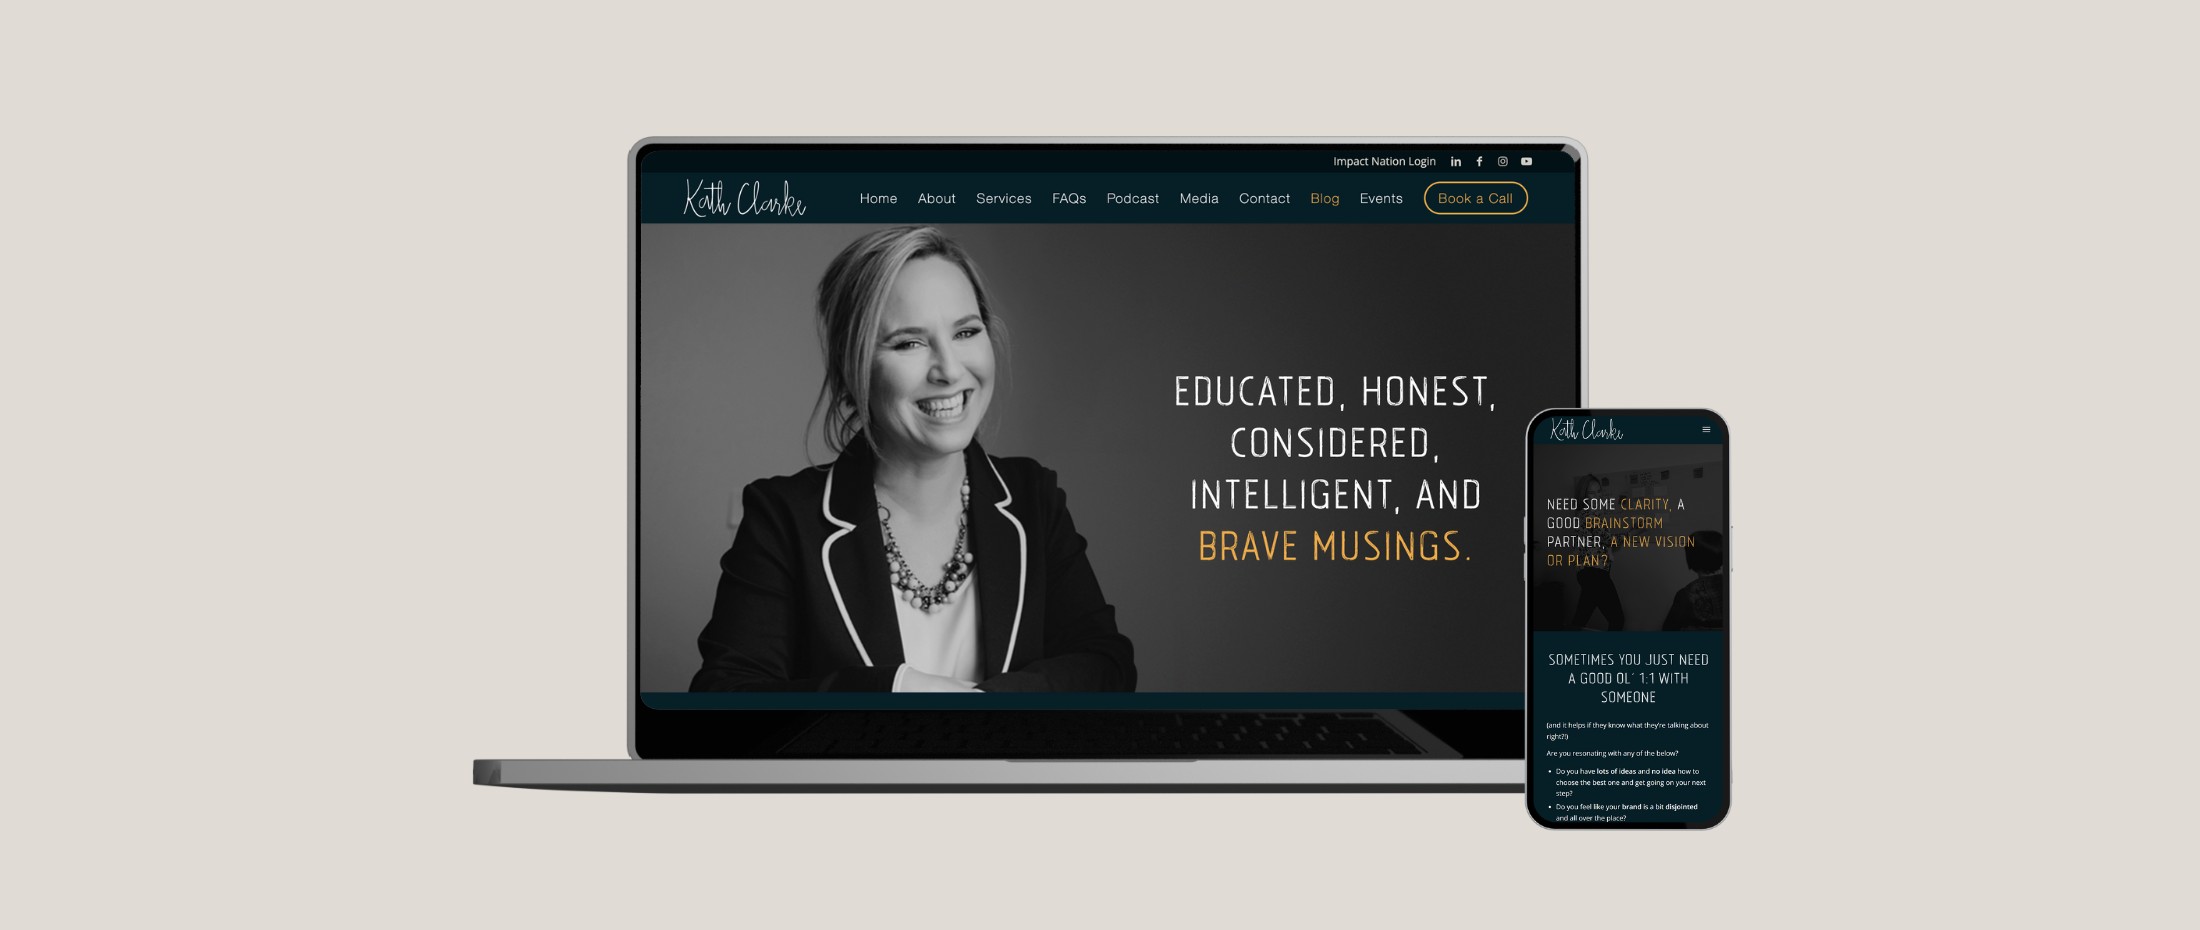 Kath Clarke - Personal Brand Strategist - Done Digital Marketing - Brisbane Australia